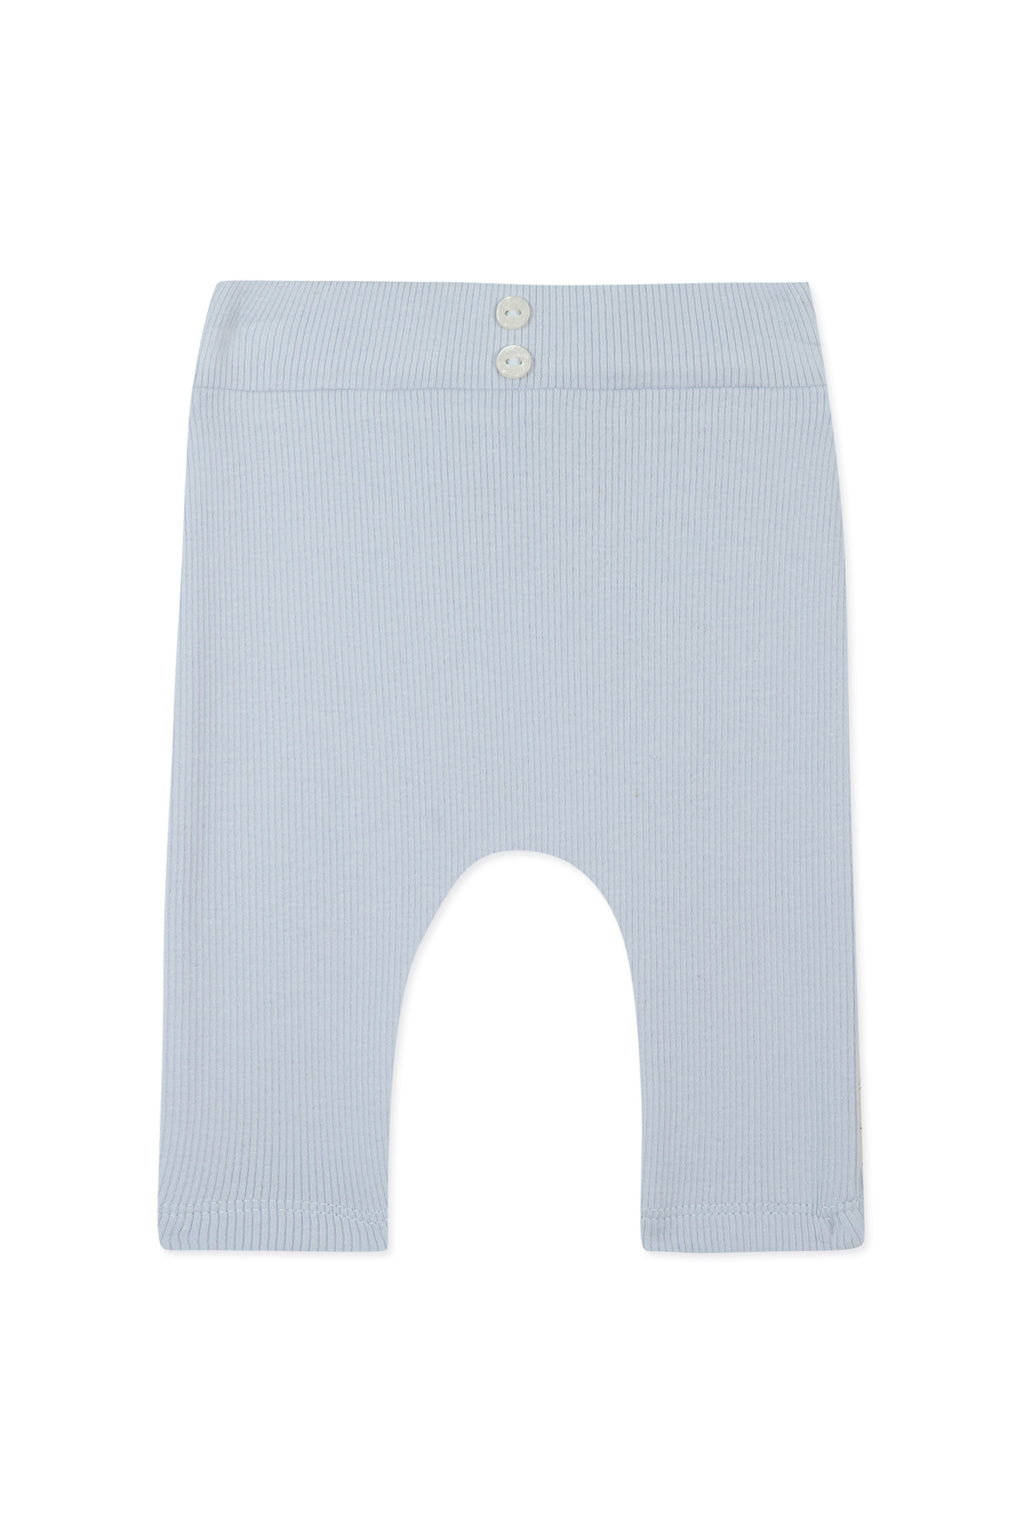 Legging - Bleu grisé coton